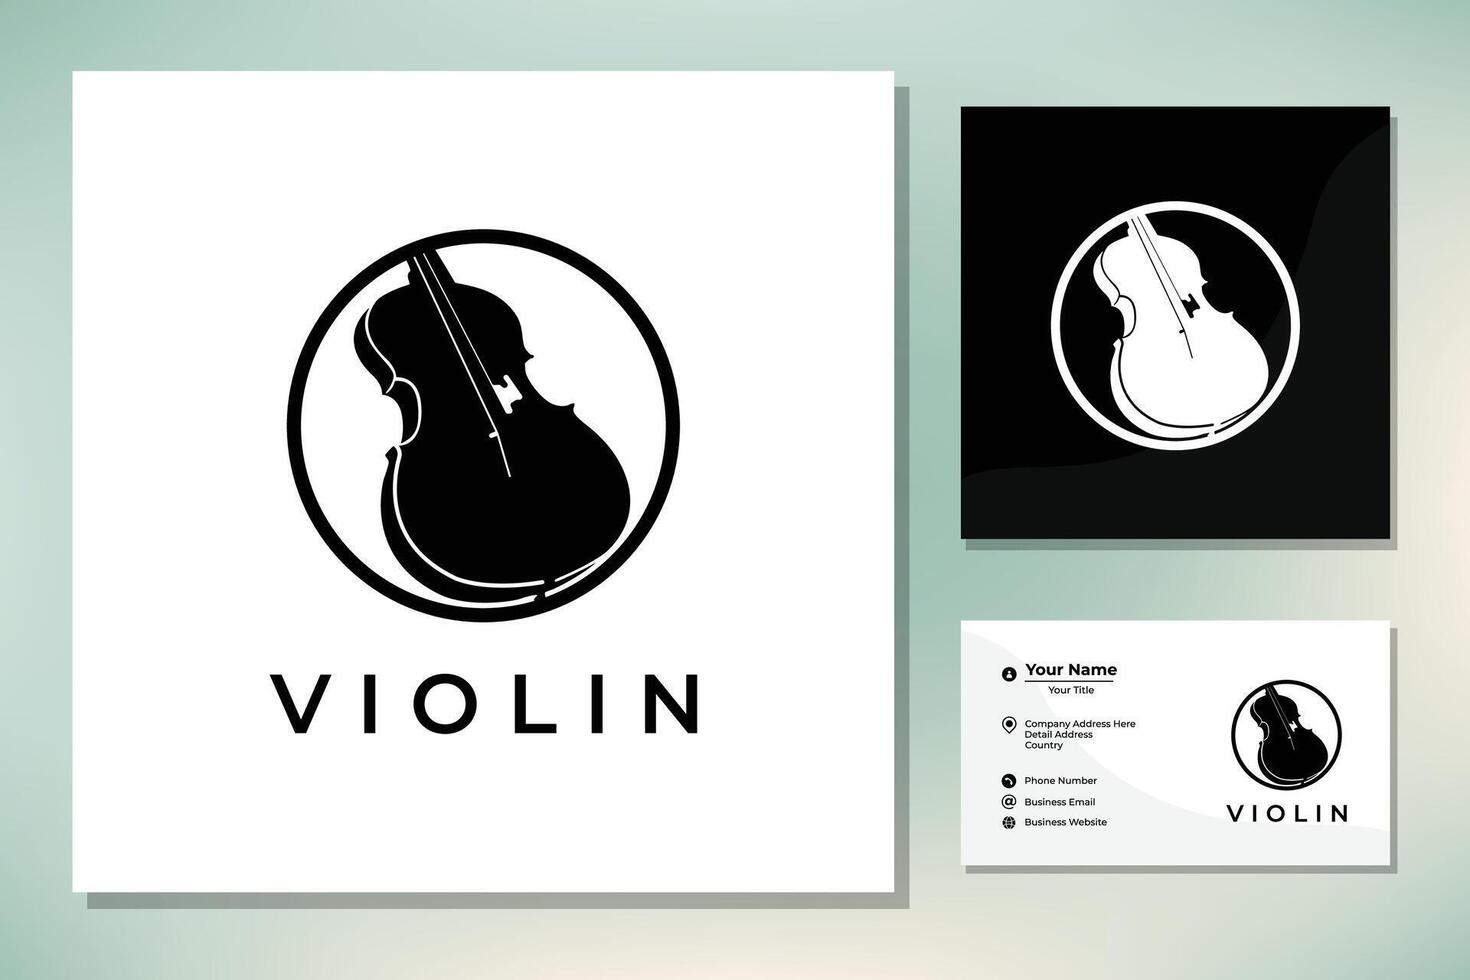 Violin Viola Fiddle Cello bass Contrabass Headstock music instrument logo design inspiration vector